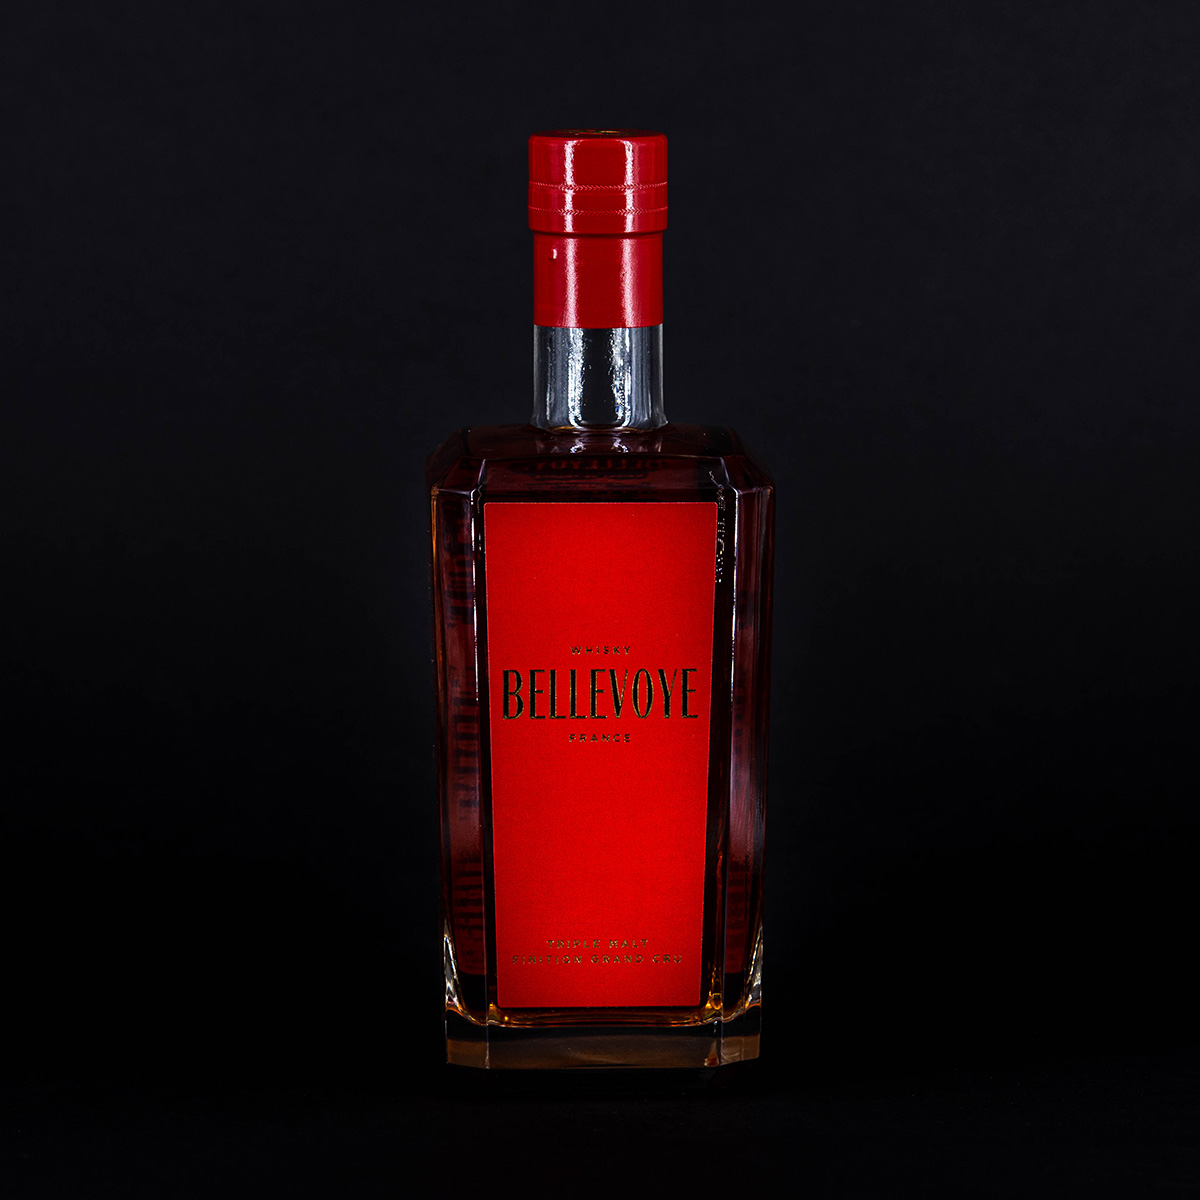 Whisky - Bellevoye - Finition grand cru